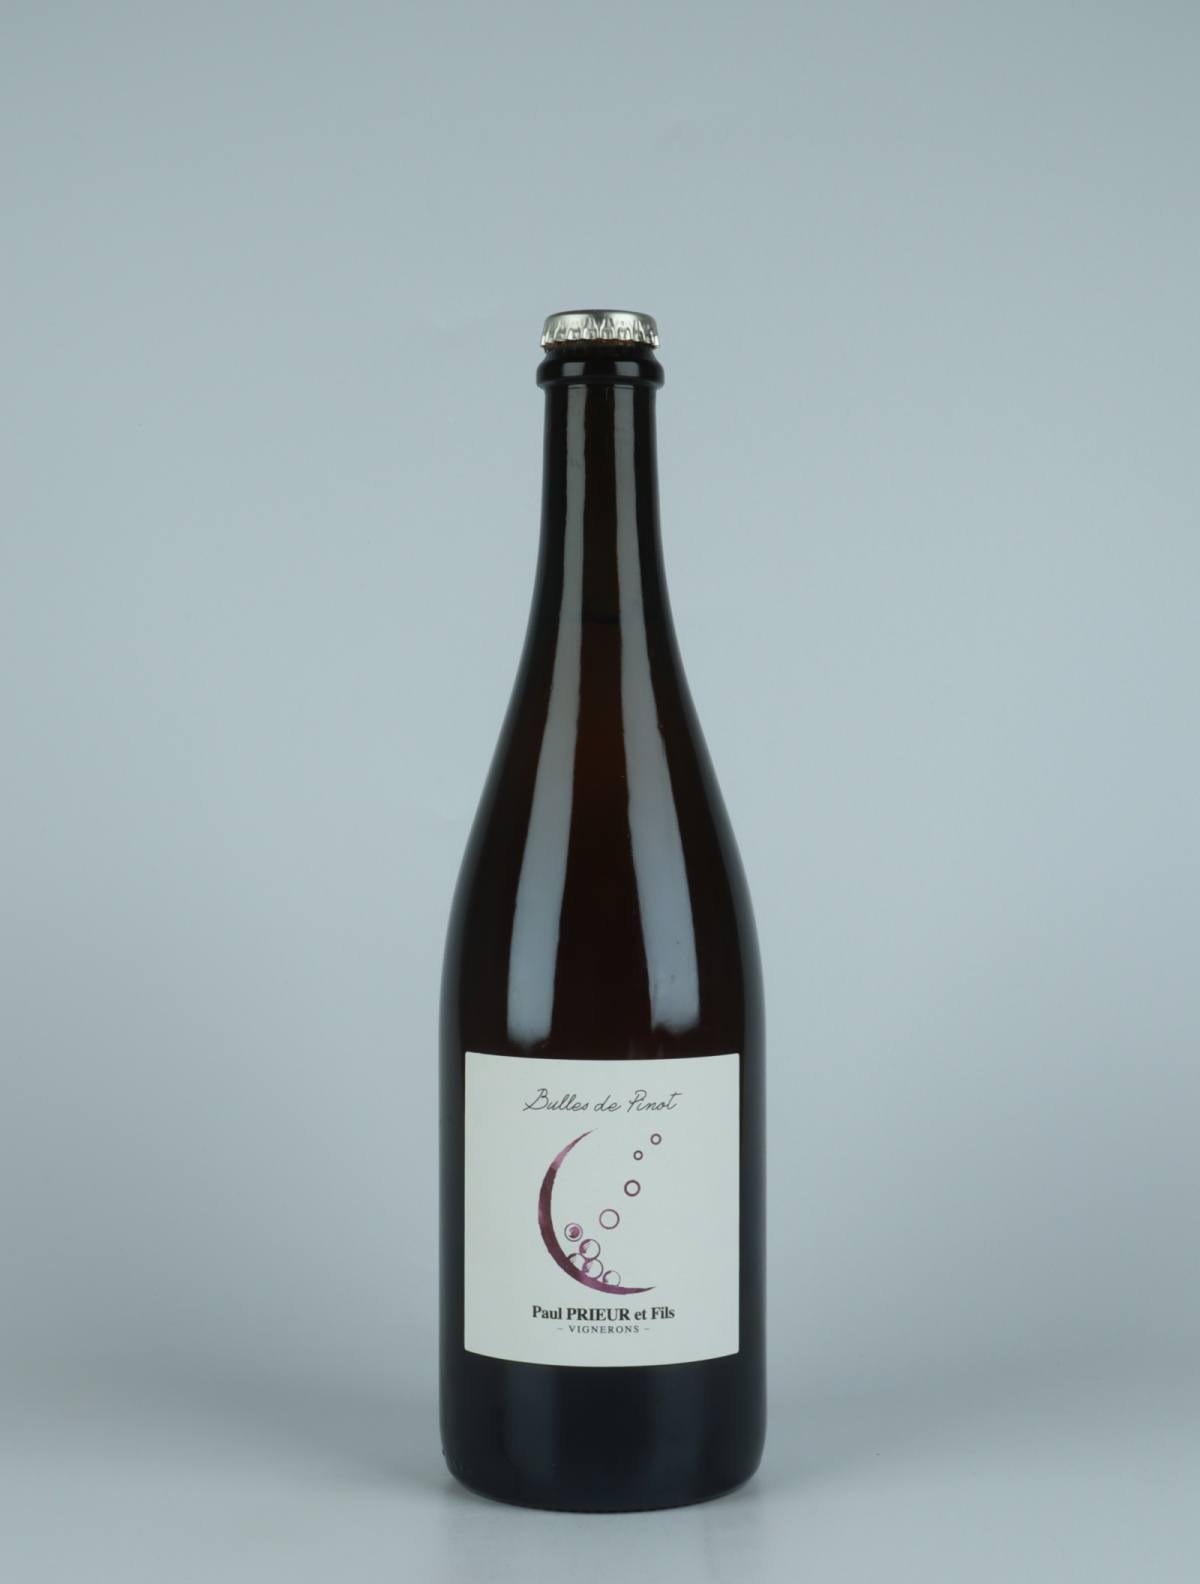 En flaske 2021 Bulles de Pinot Mousserende fra Paul Prieur et Fils, Loire i Frankrig